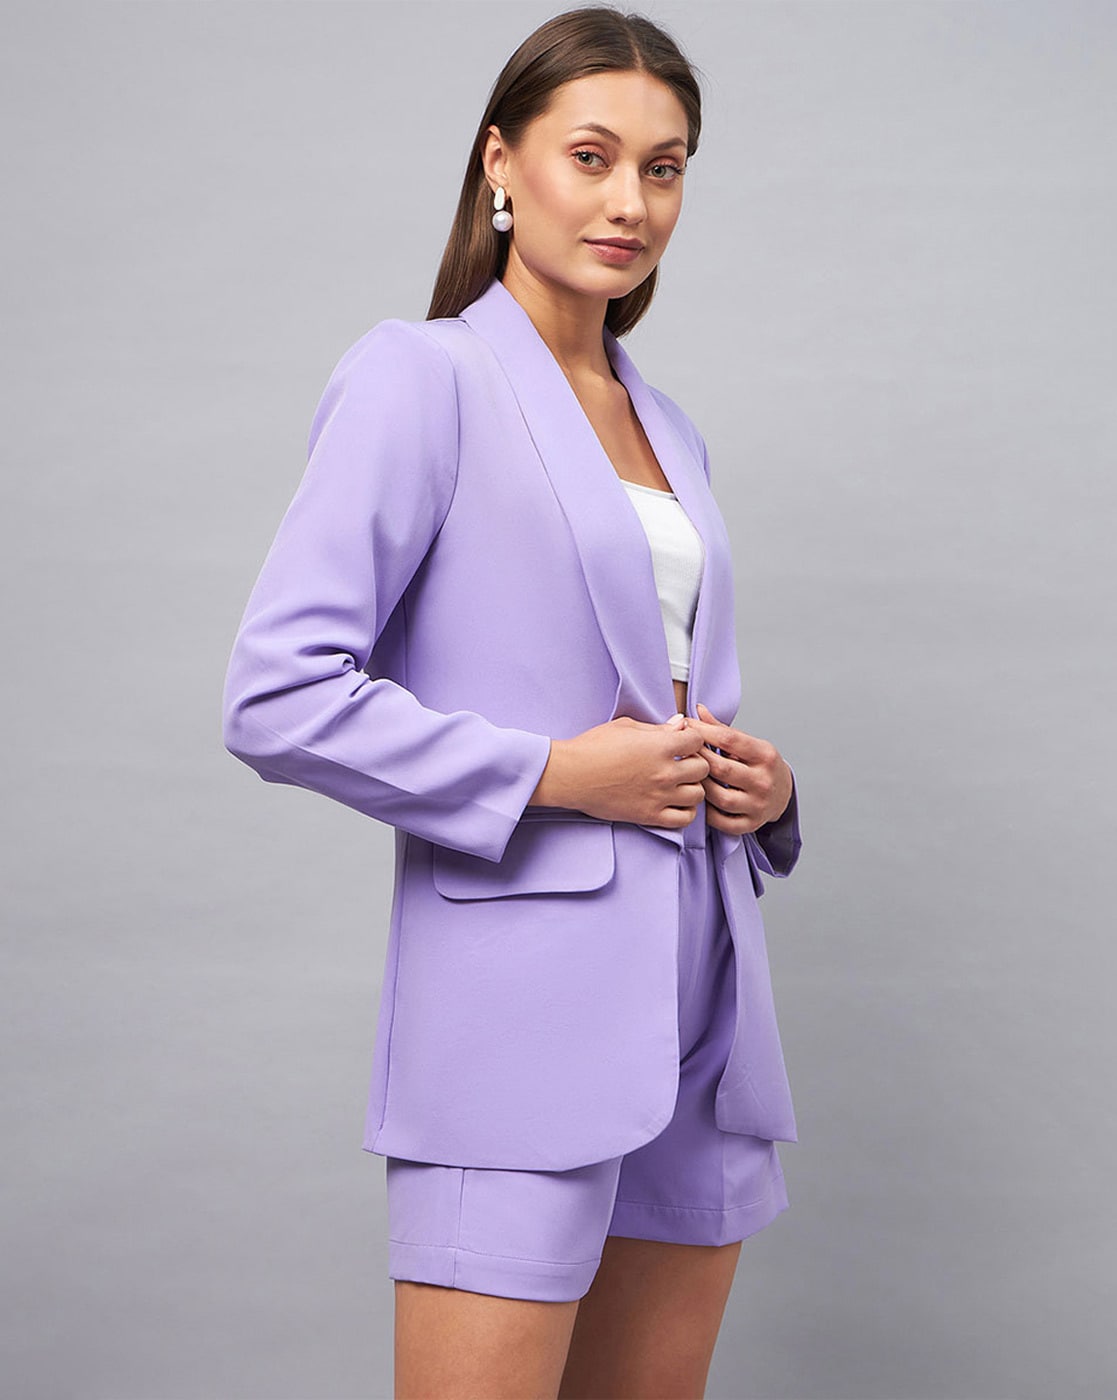 Women's Suits & Tailoring | Next Official Site